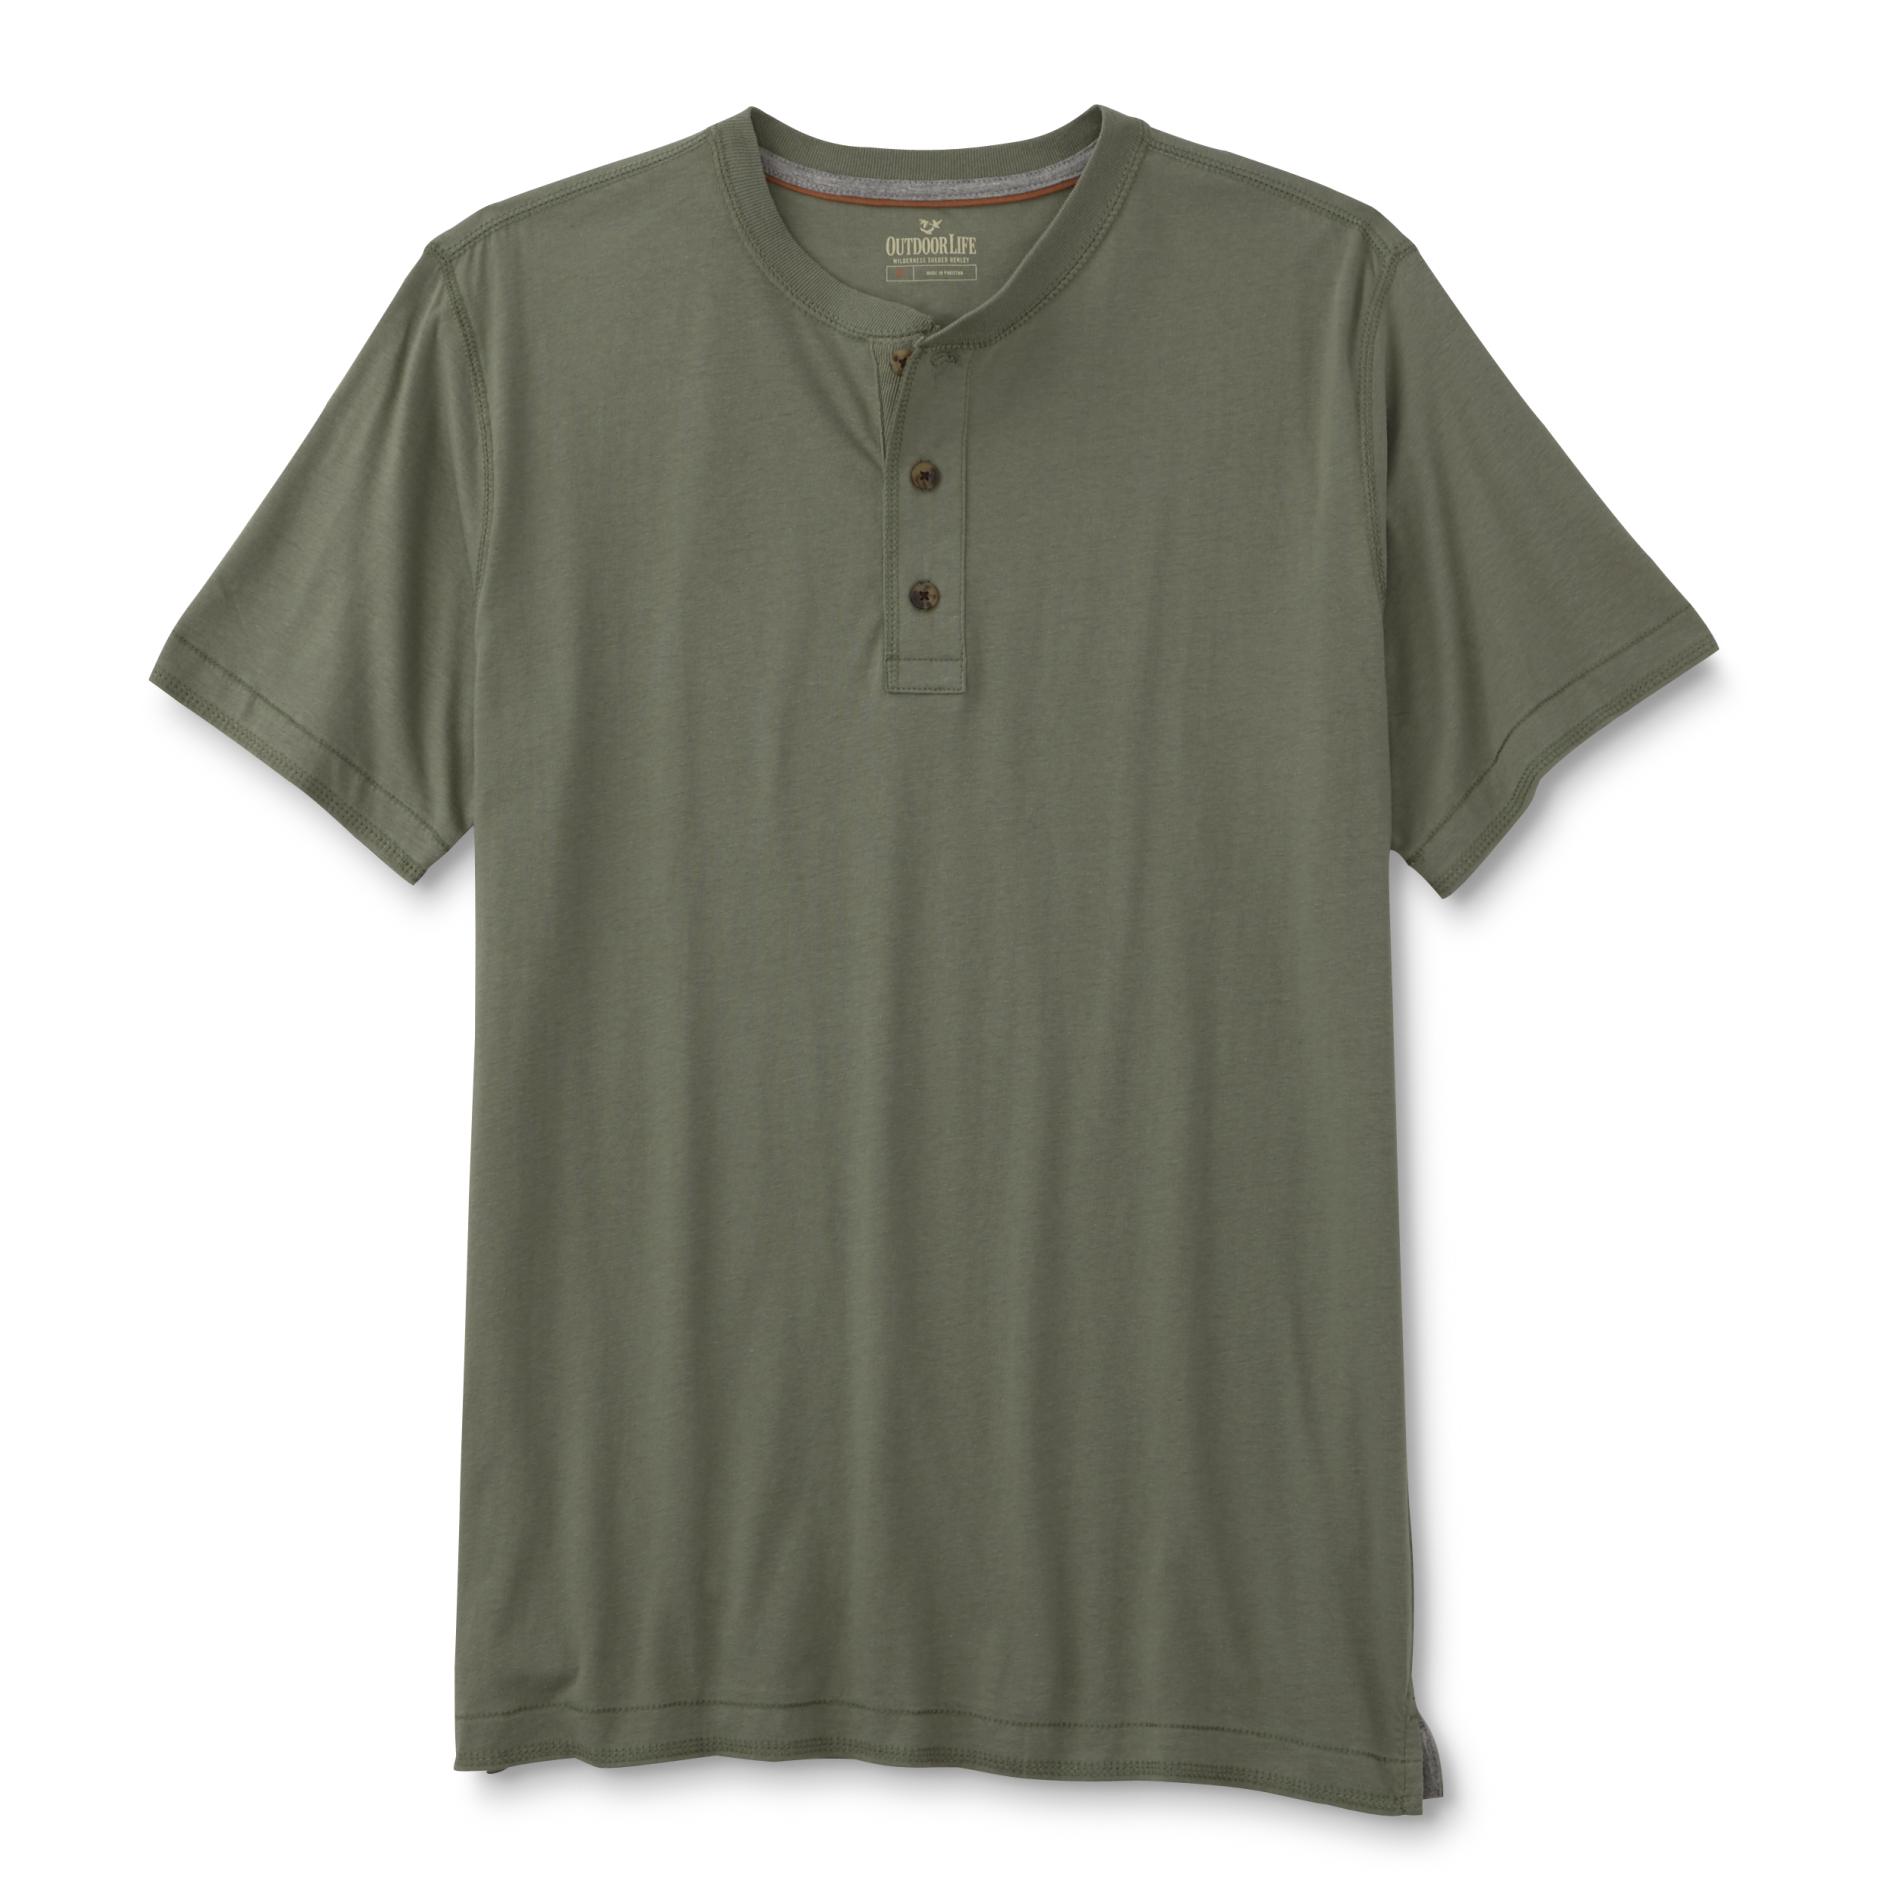 Outdoor Life Men's Henley Shirt - Sears